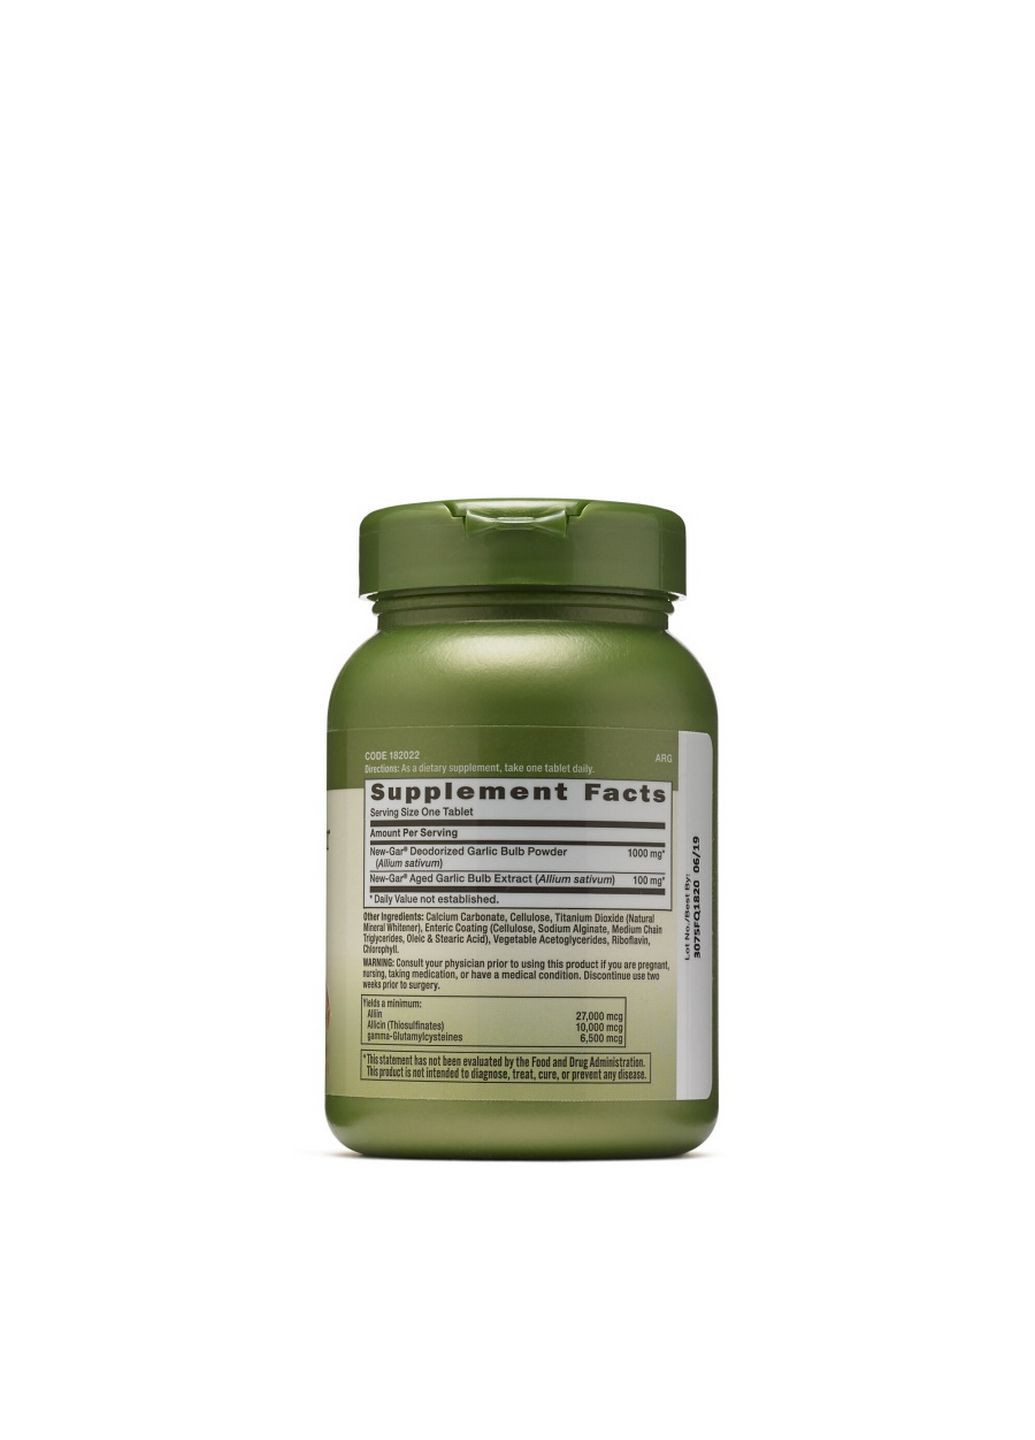 Натуральна добавка Herbal Plus Odorless Super Garlic 1100 mg, 100 таблеток GNC (293478877)